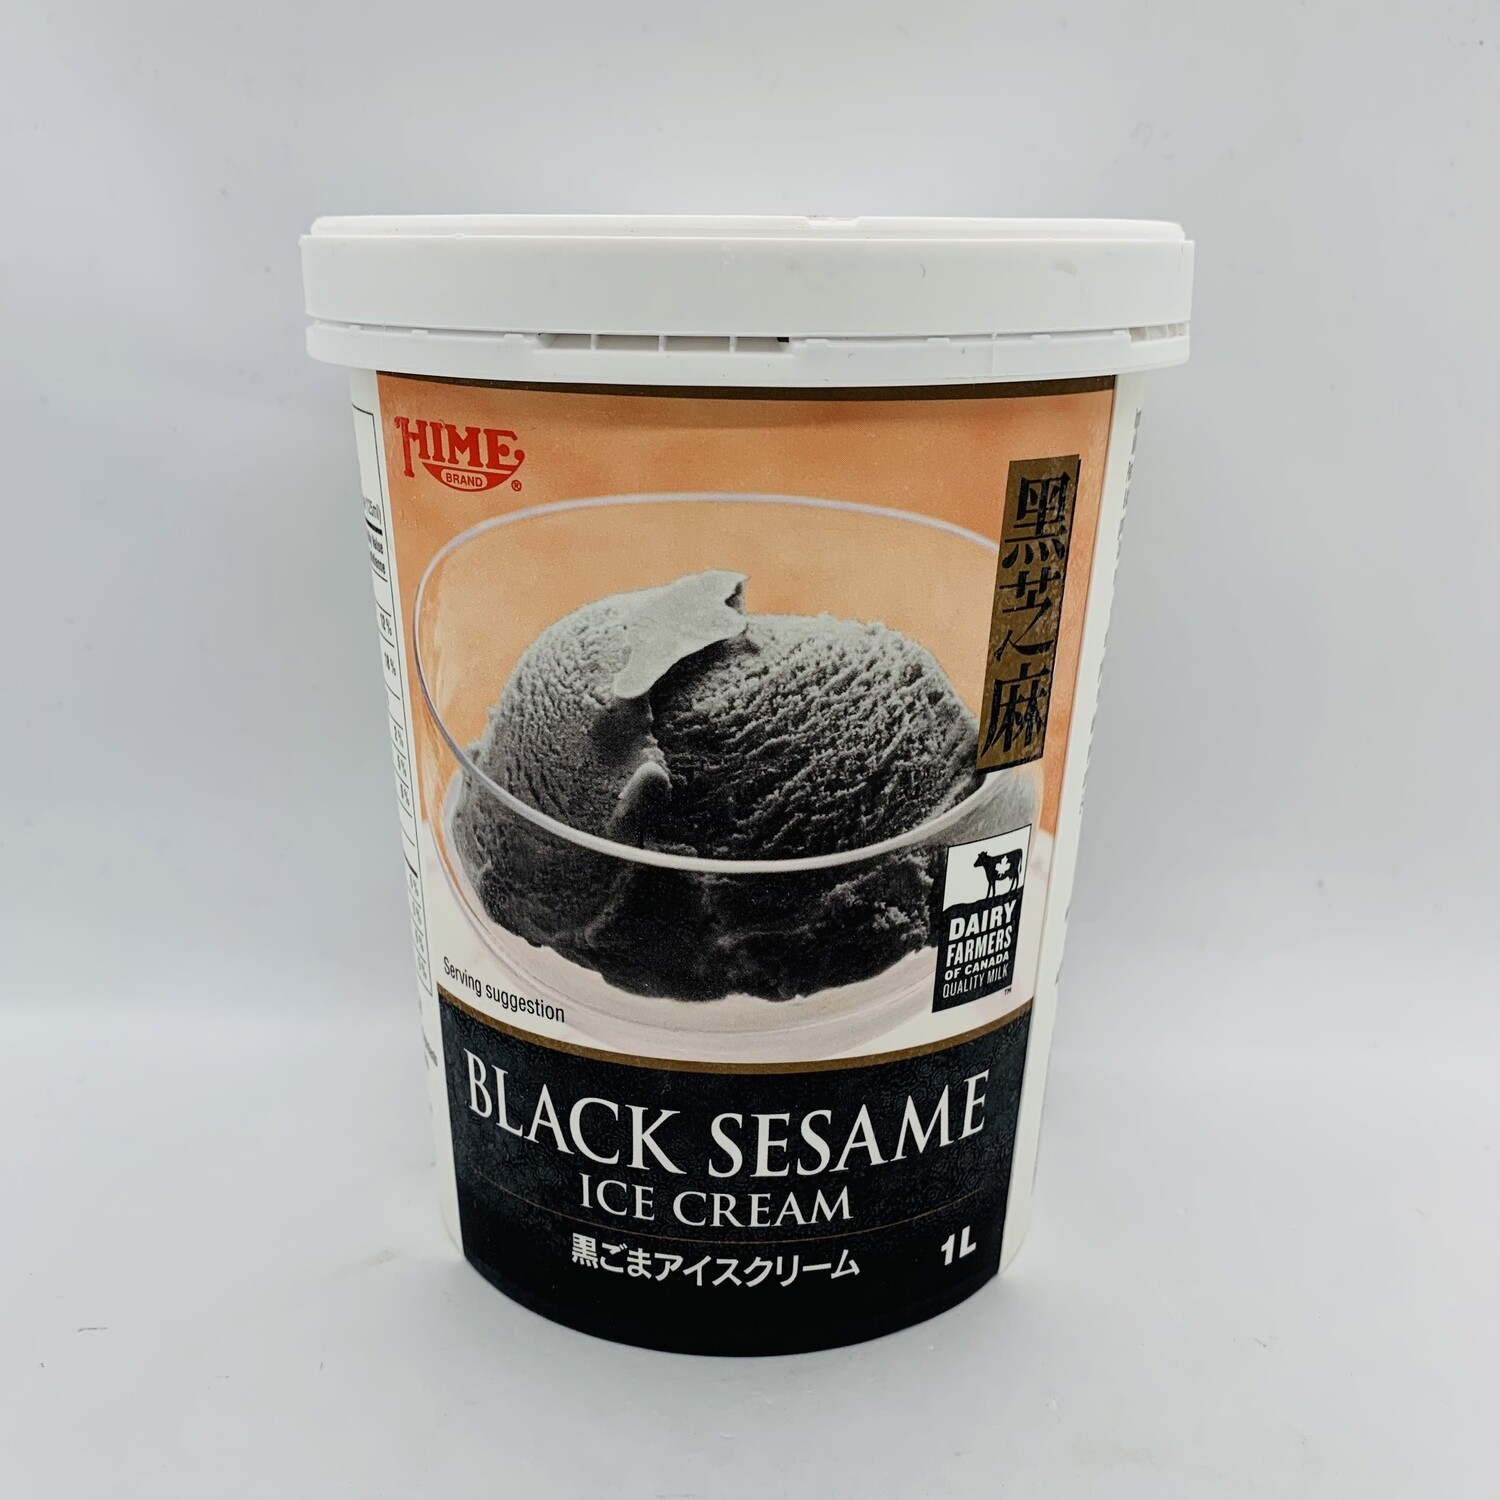 Hime Black Sesame Ice Cream